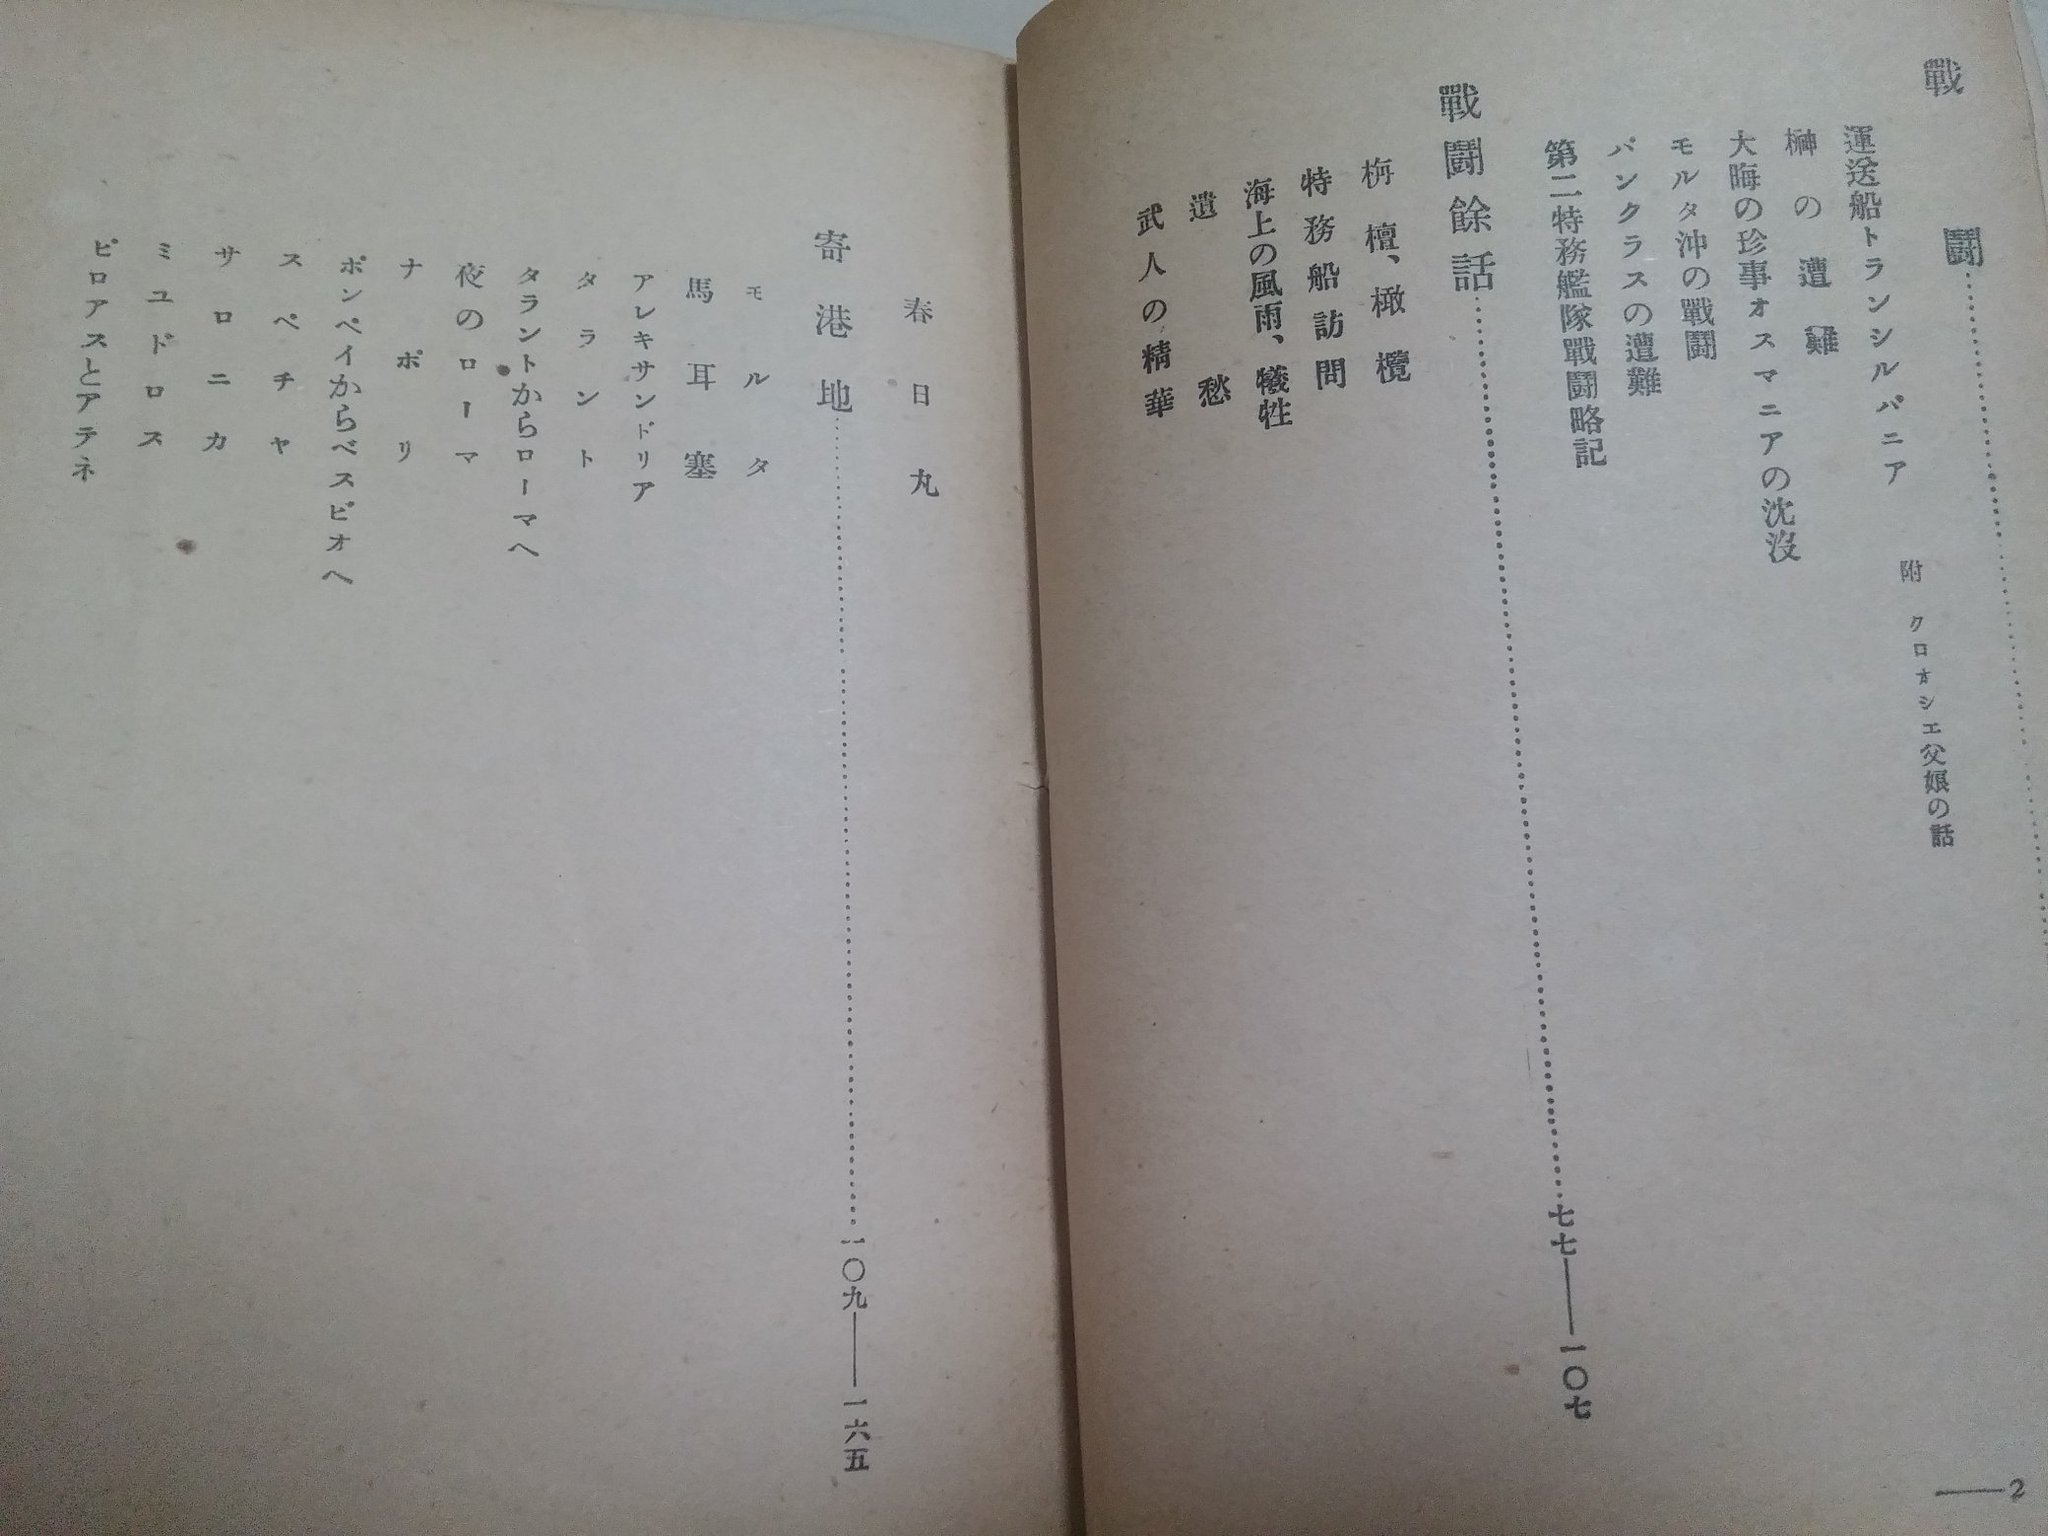 Kk 第二特務艦隊については 第一次大戦後に第二特務艦隊整理部が編纂した 遠征記 がある この本の後半は片岡覺太郎氏の手記で 01年に 日本海軍地中海遠征記 として出版されてる